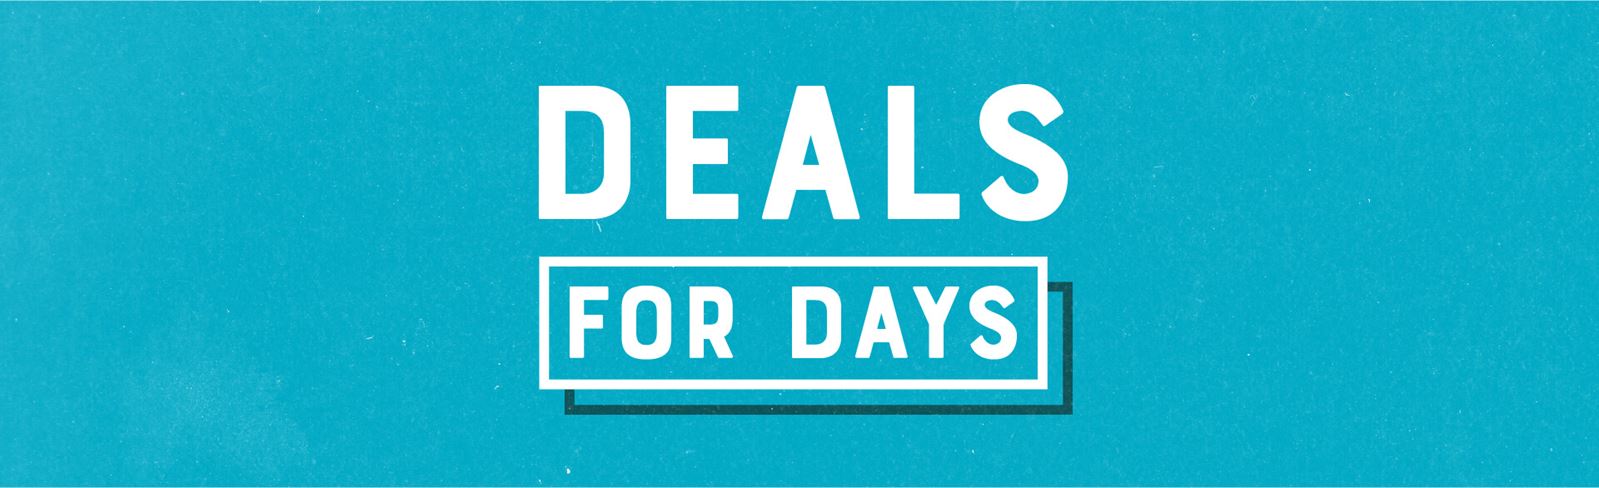 deals-for-days-blue-reeds-crossing.jpg